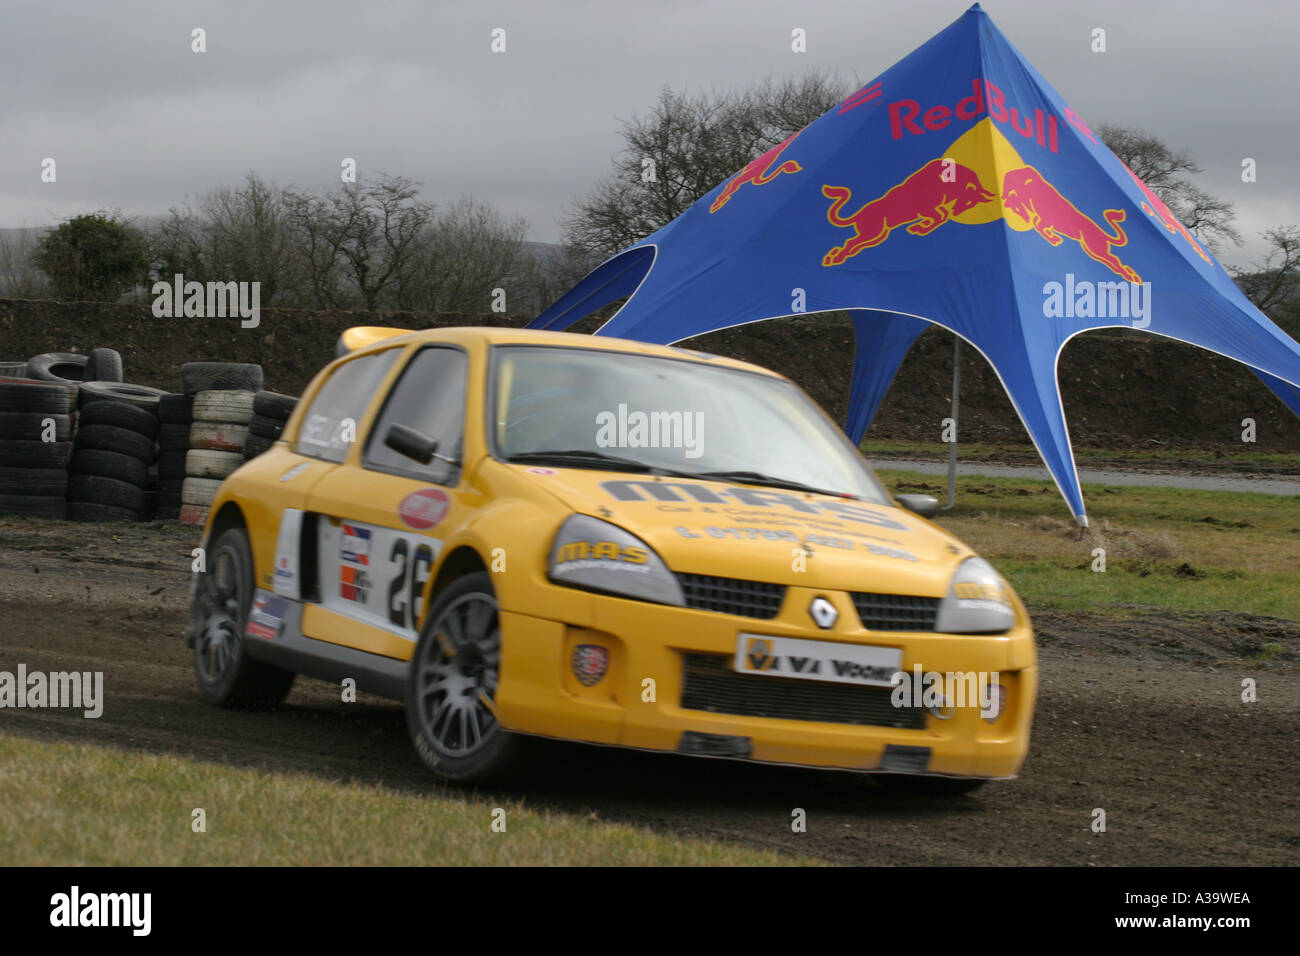 Renault Clio Rallycross Auto Folien hinter Red Bull Zelt britischen  Rallycross Meisterschaft Nutts Ecke Motorsport Schaltung Stockfotografie -  Alamy